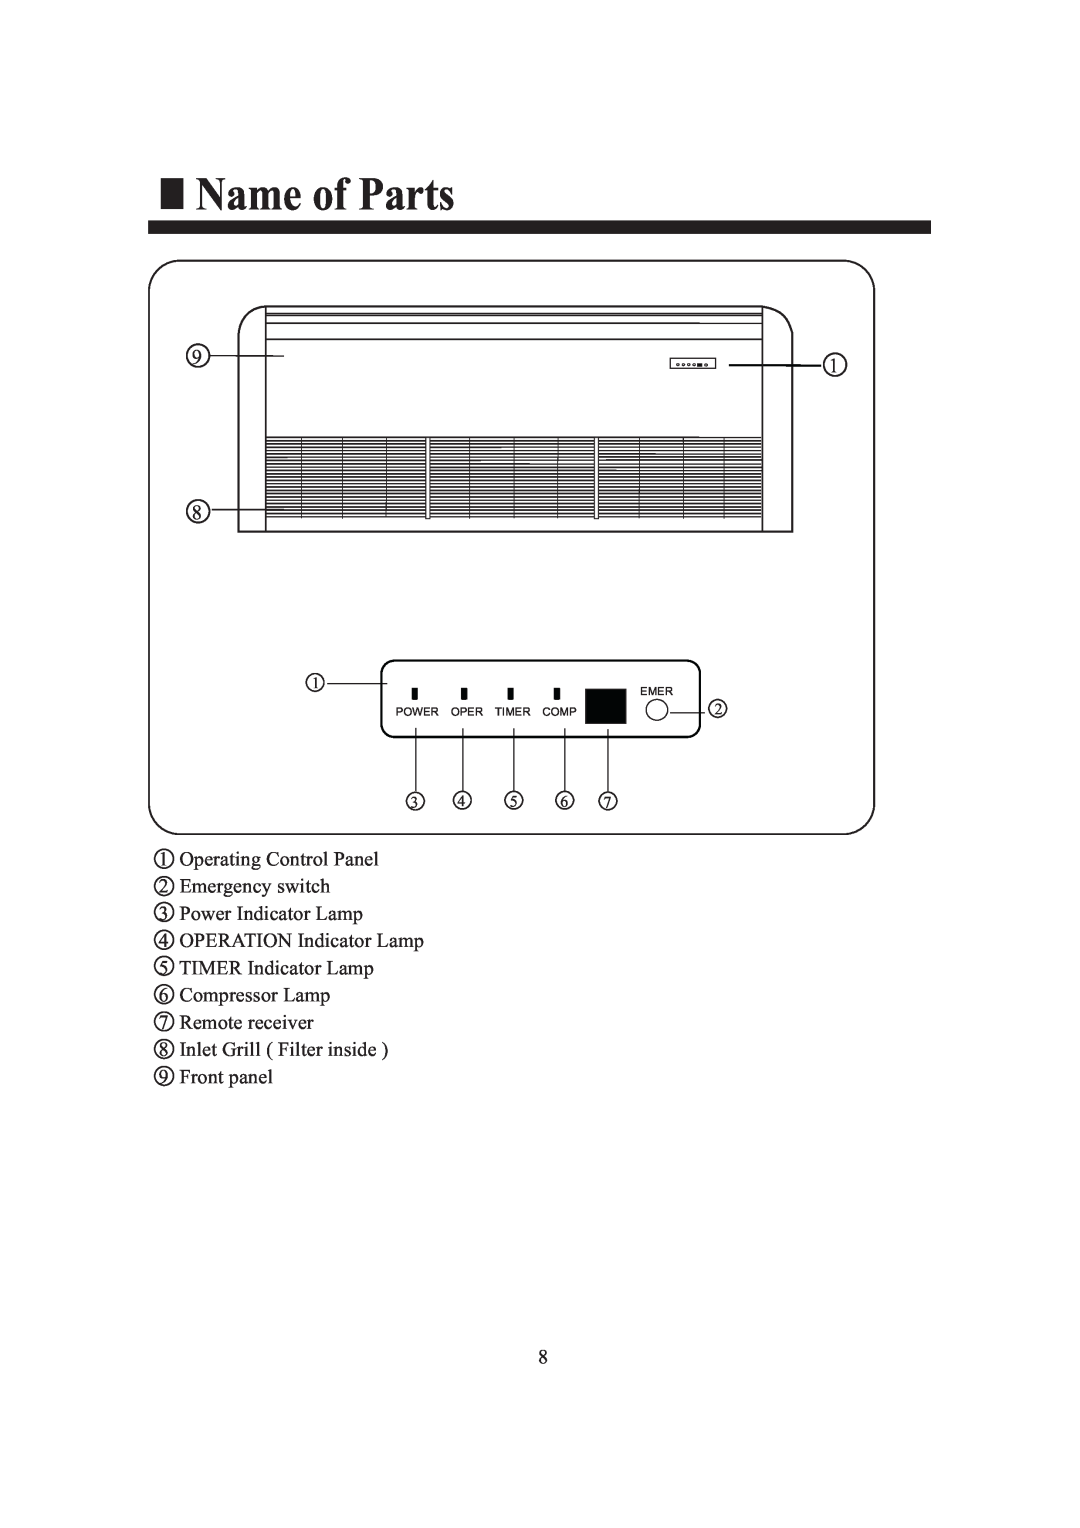 Frymaster HCFU-42HF03 Name of Parts, 1Operating Control Panel 2 Emergency switch, TIMER Indicator Lamp 6 Compressor Lamp 